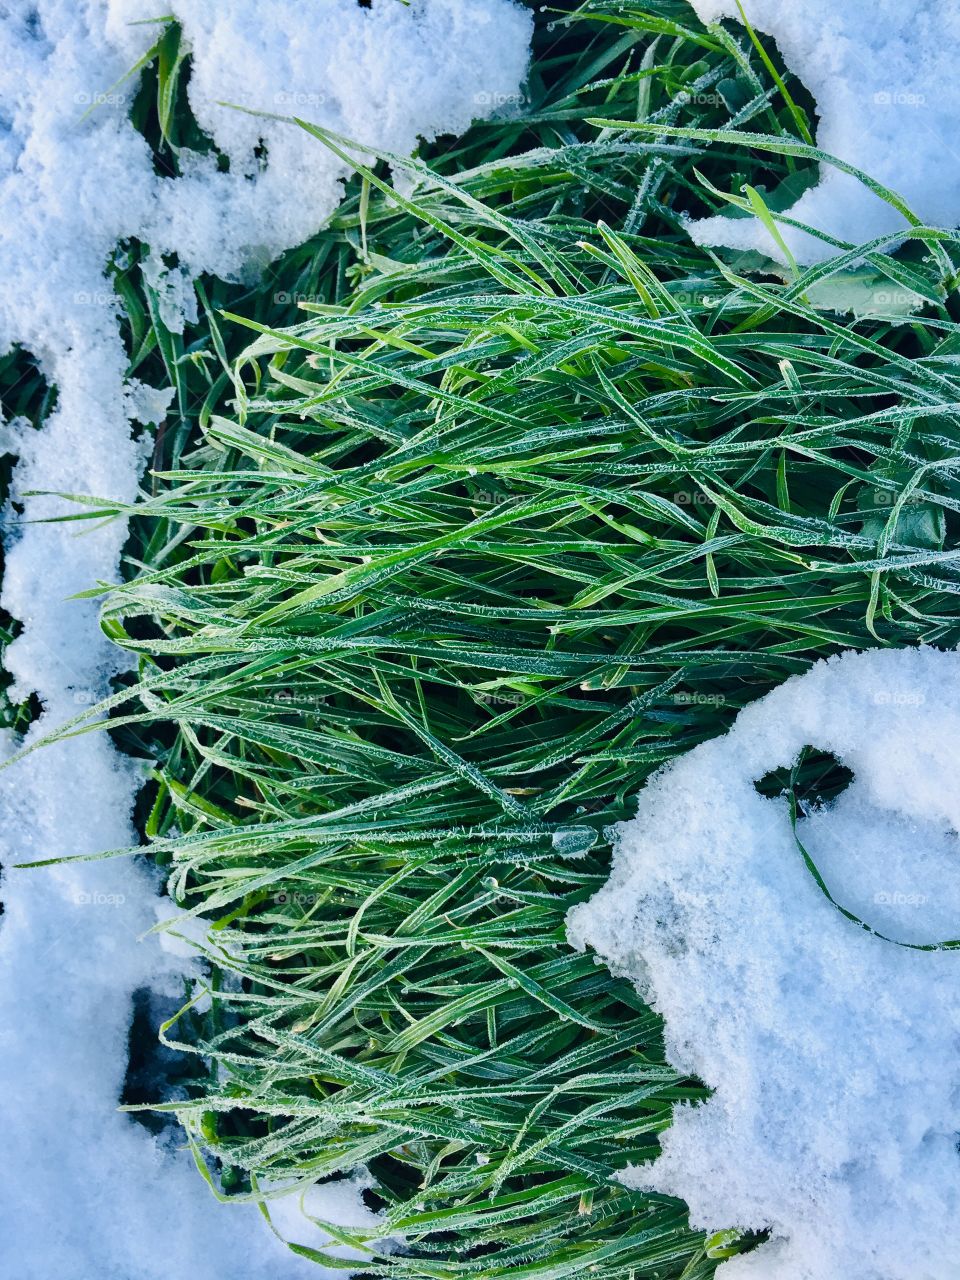  Snow on frozen, green, pasture grass